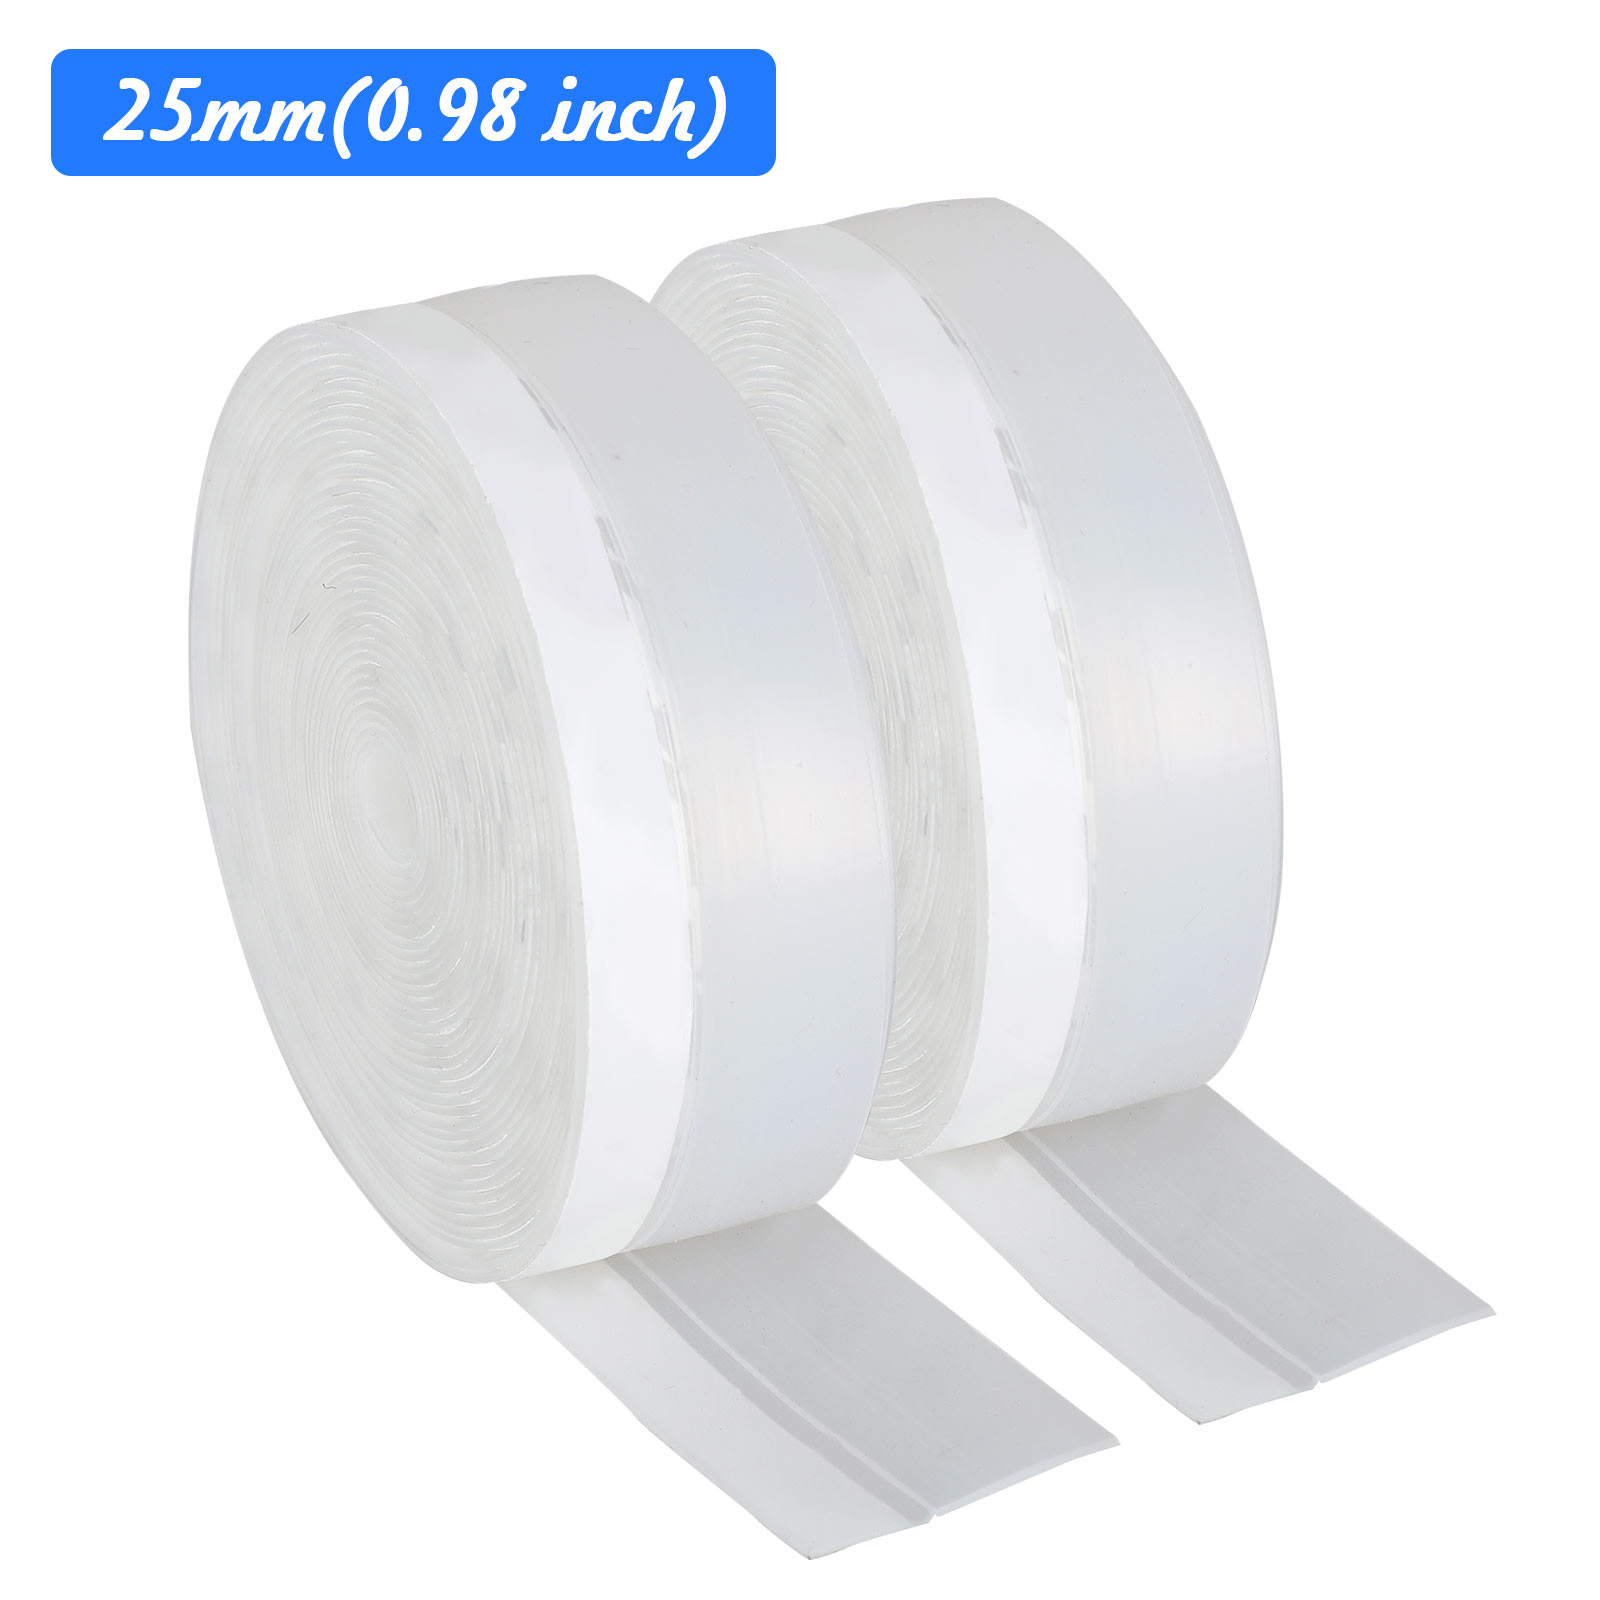 Window Door Foam Adhesive Strip Sealing Tape Adhesive Rubber Weather Strip DSUK 